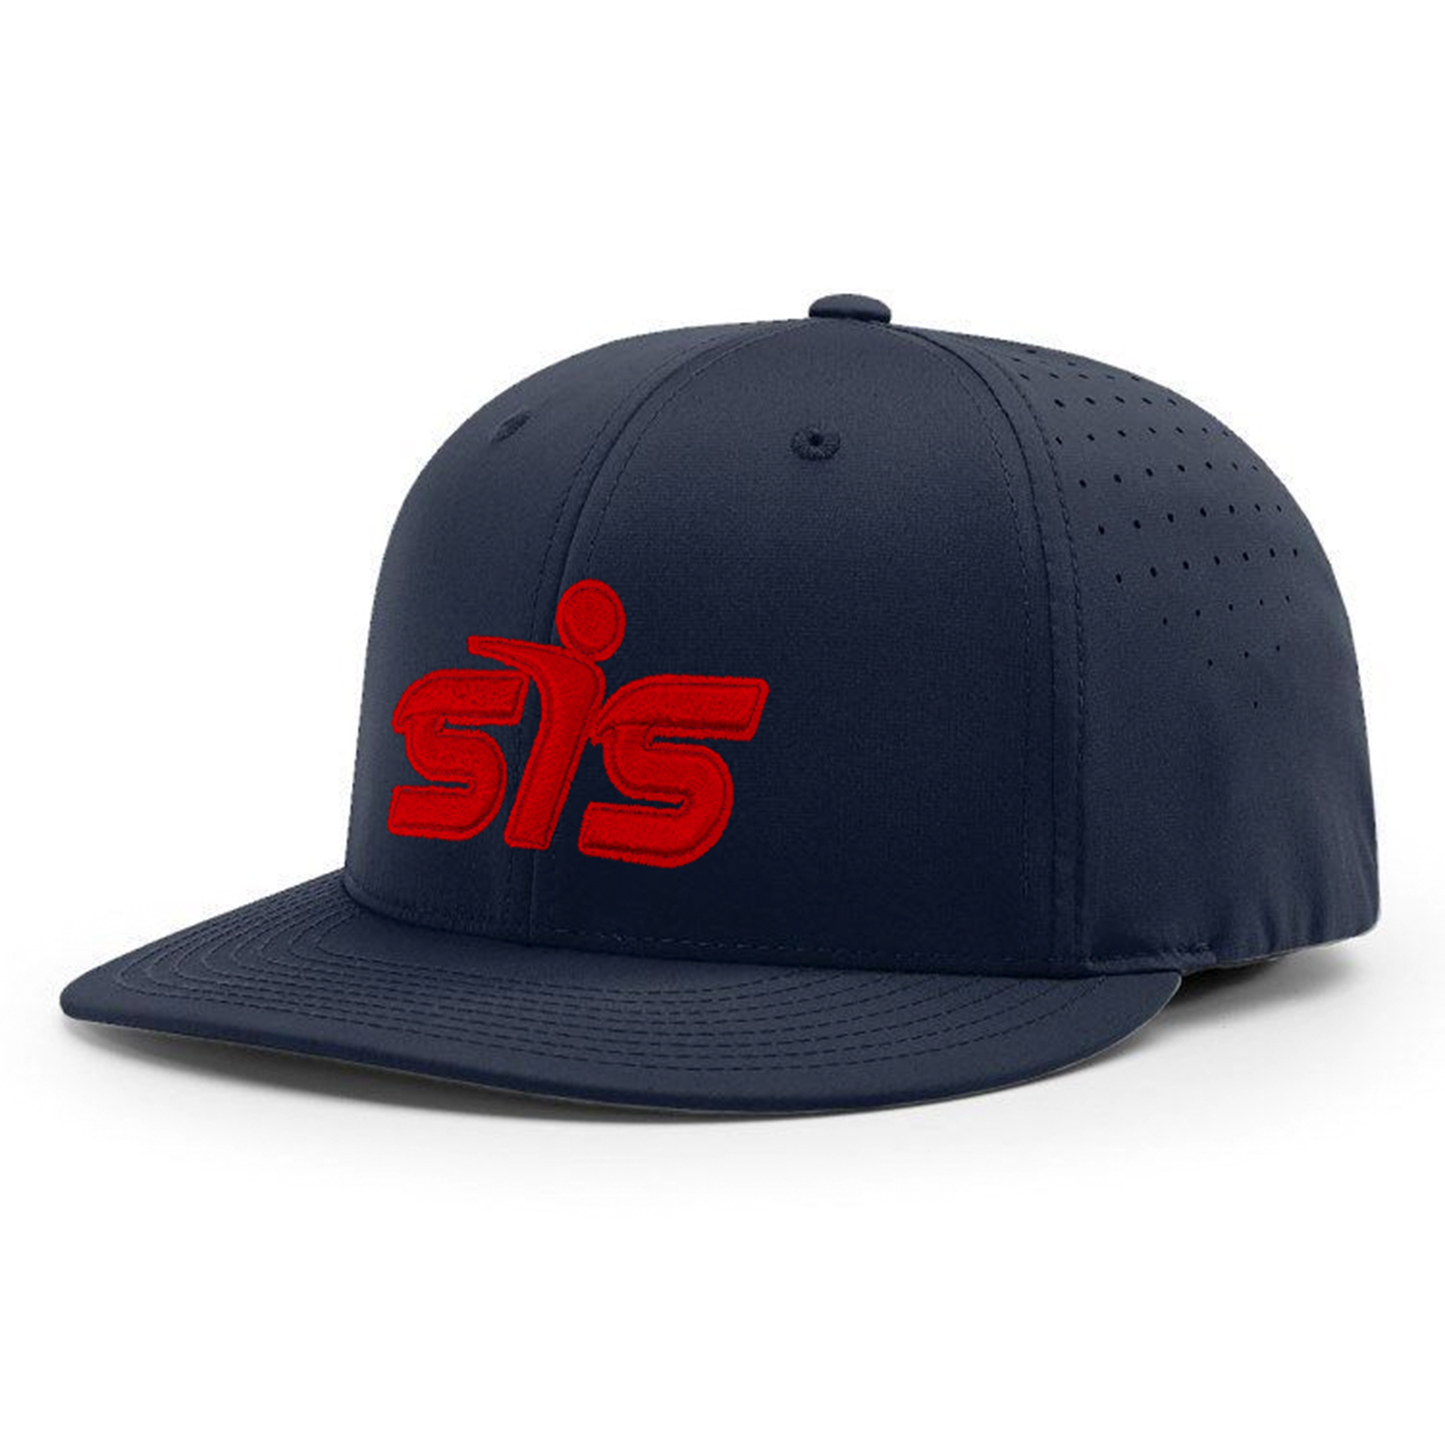 Smash It Sports CA i8503 Performance Hat - Navy/Red